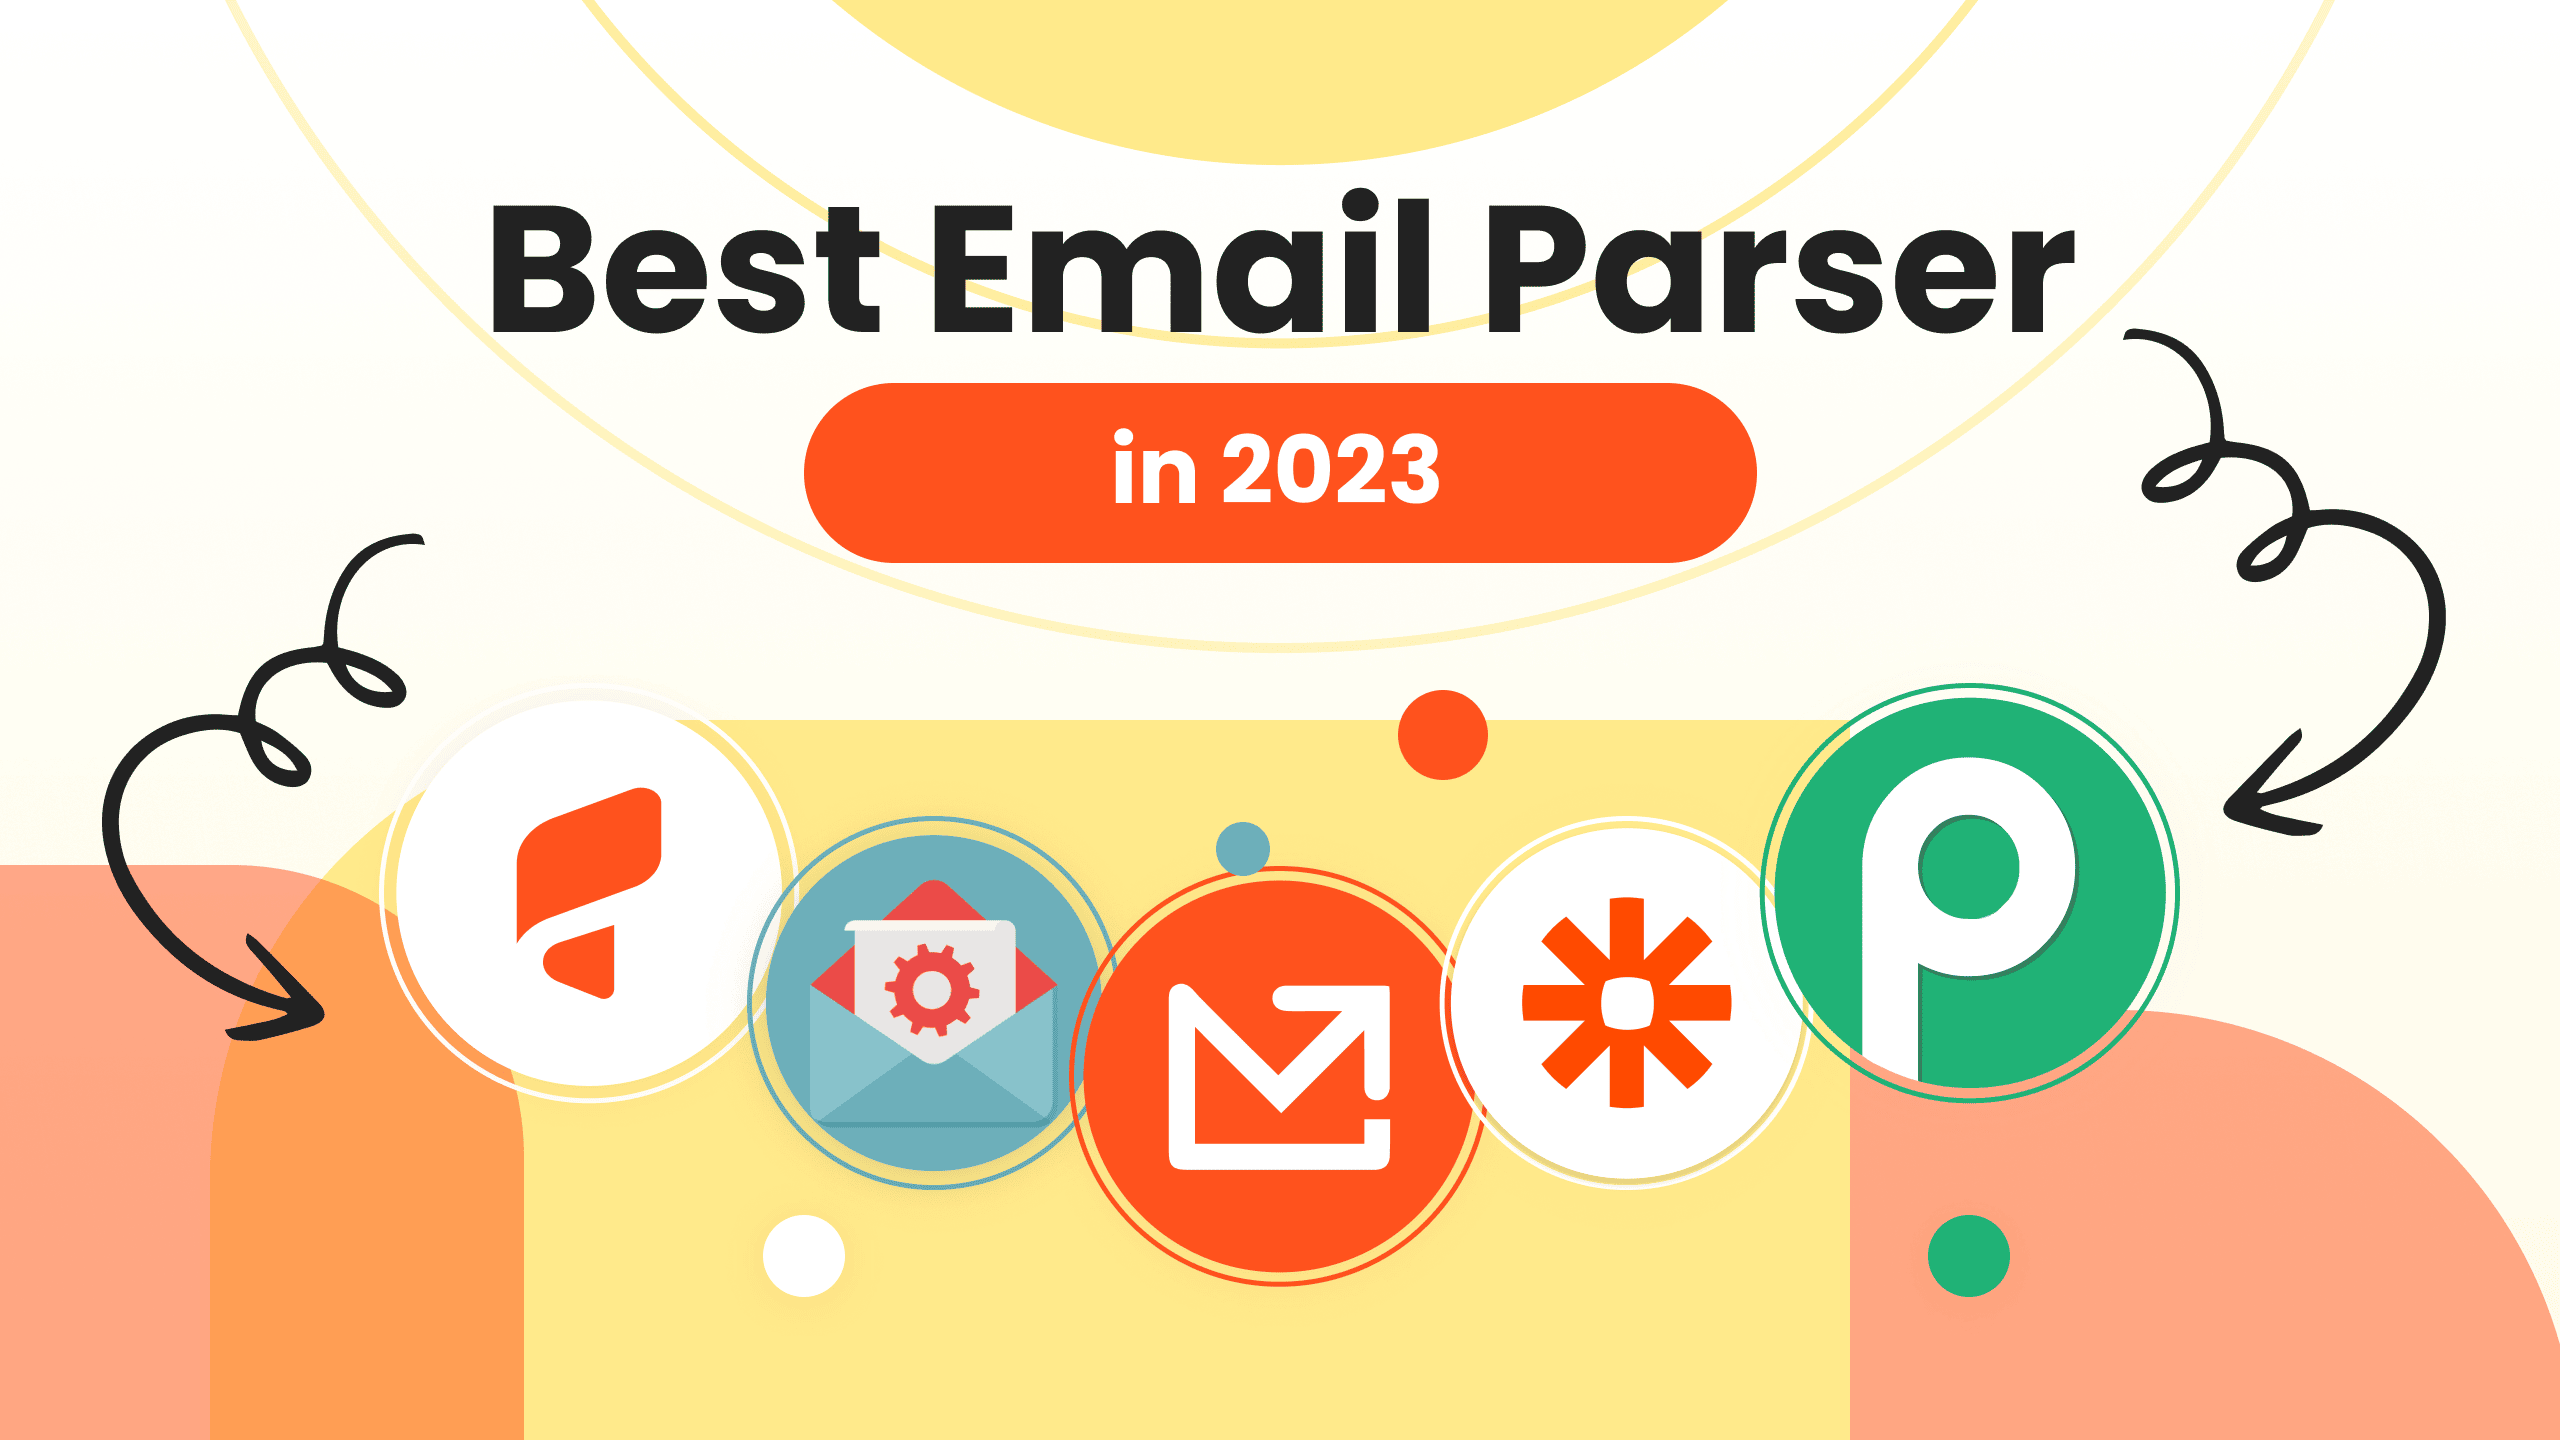 Best Email Parser in 2023